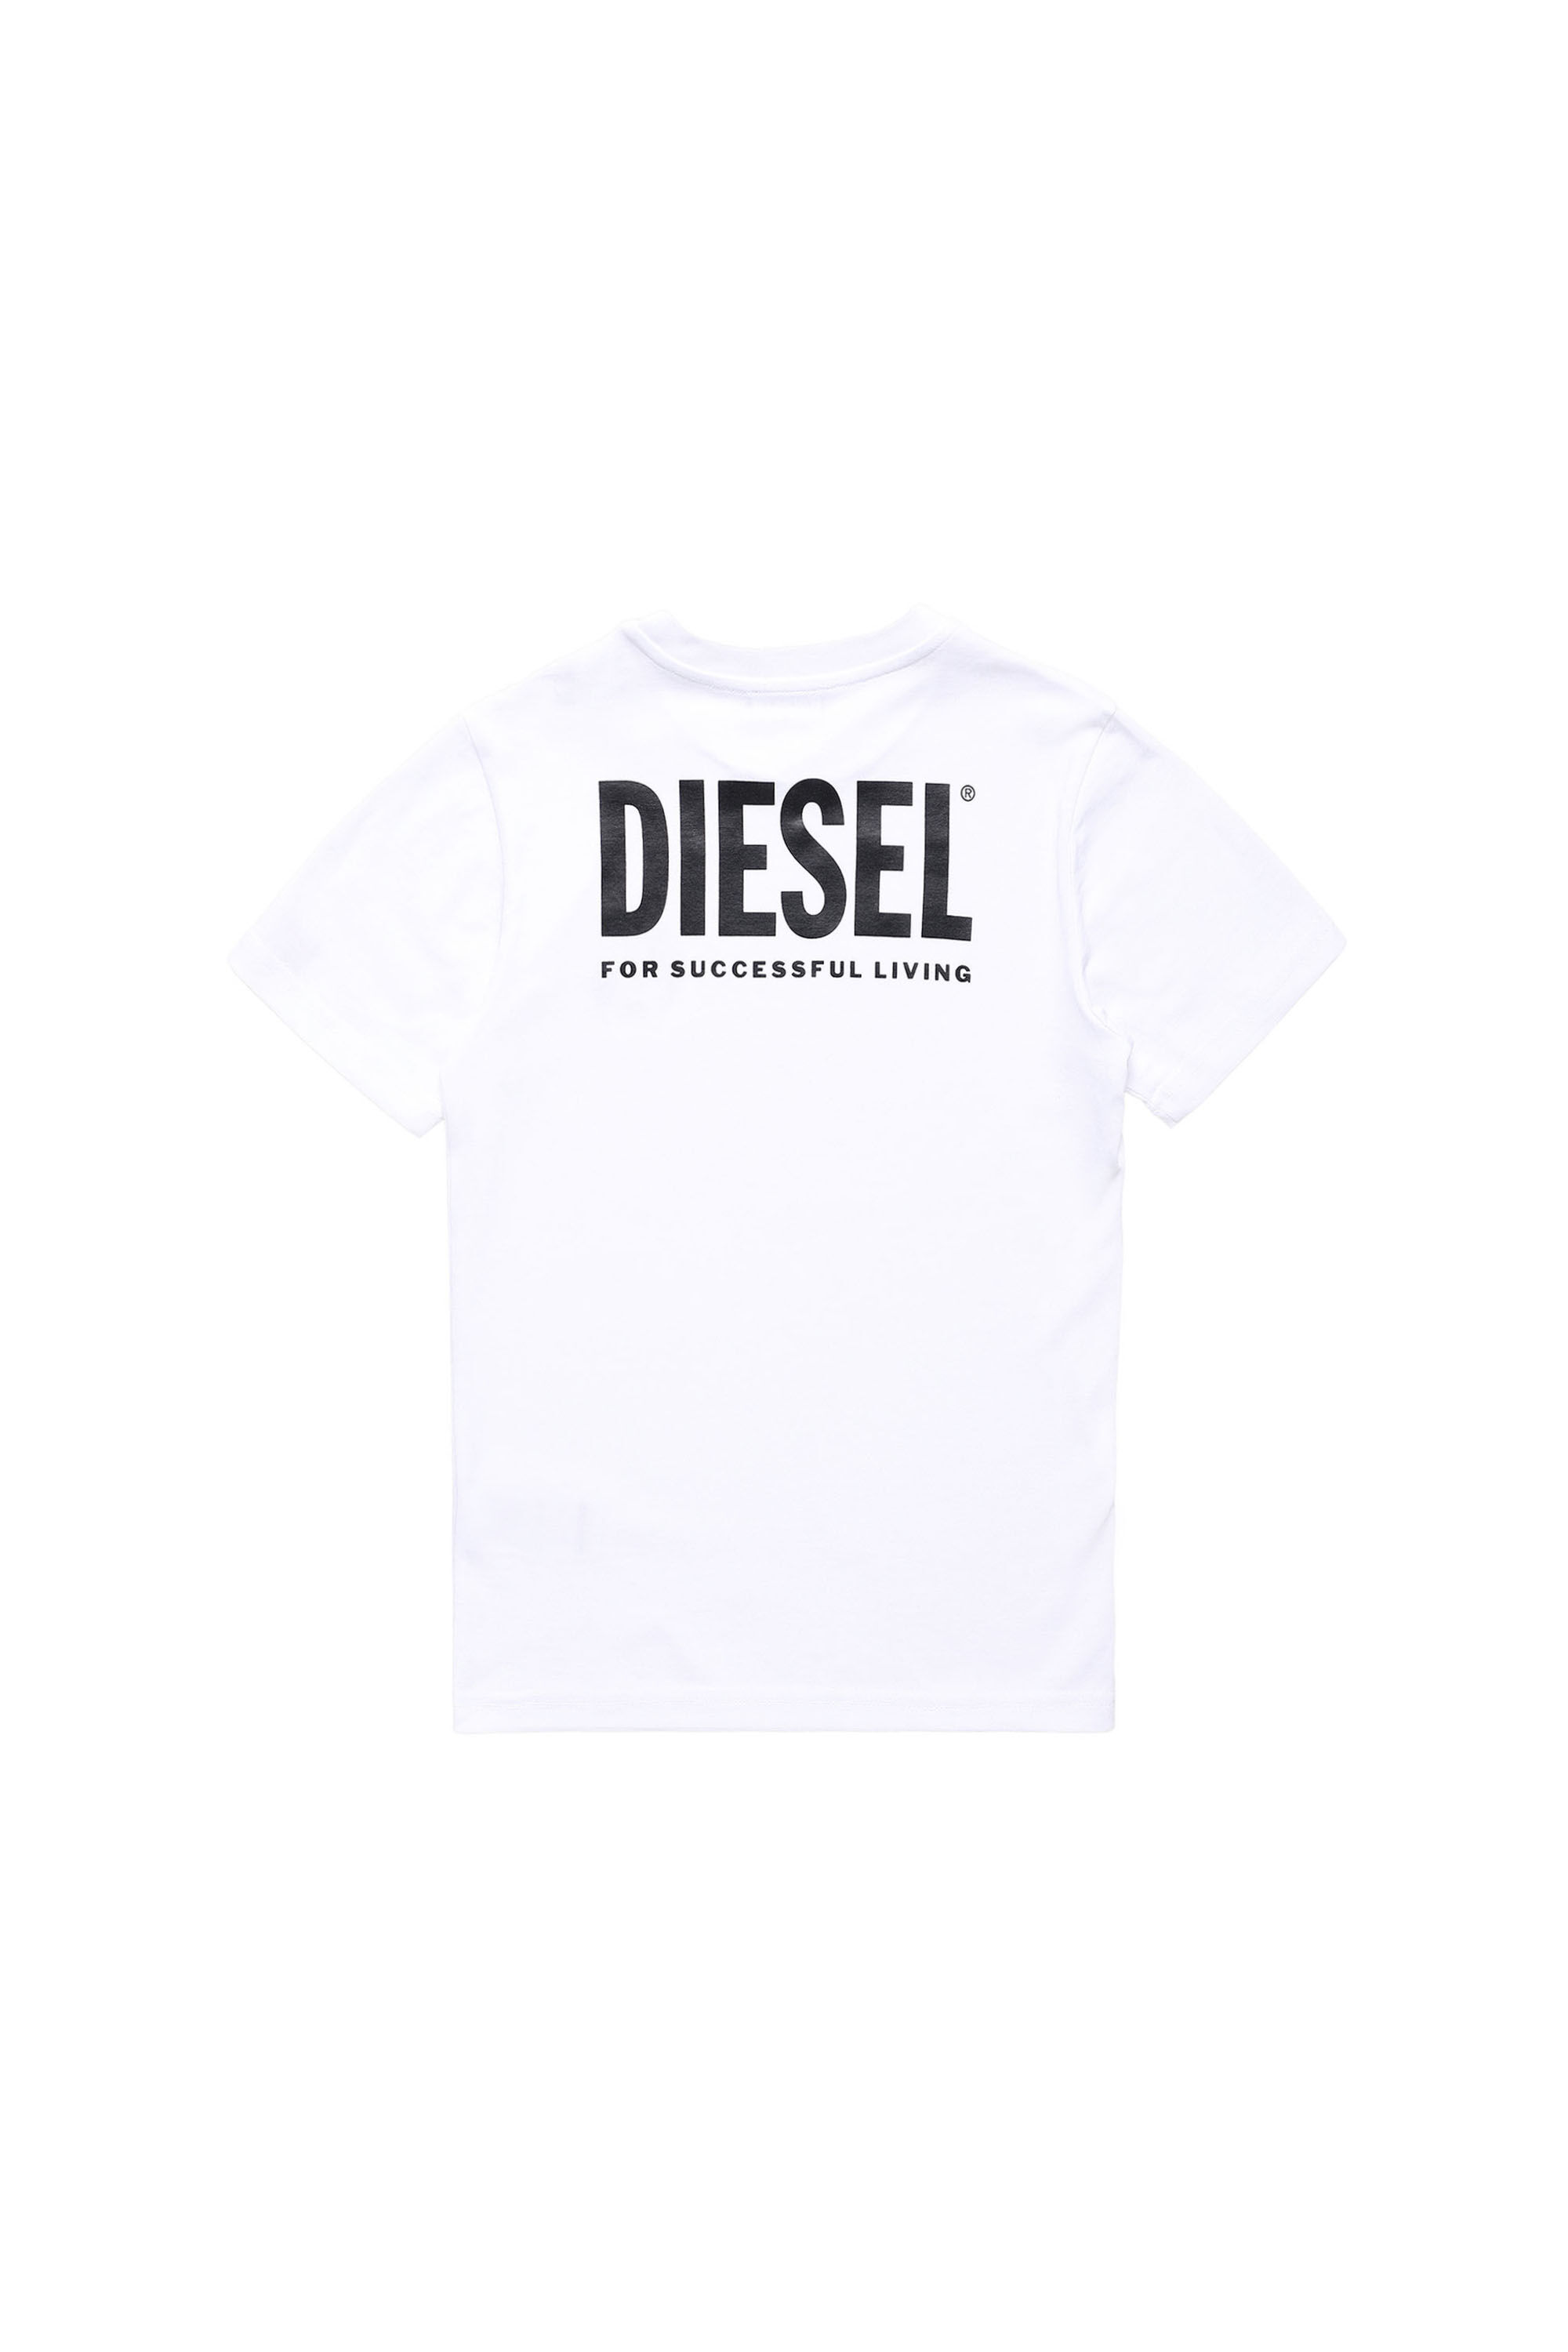 Diesel - LR TDIEGO VIC, Bianco - Image 2